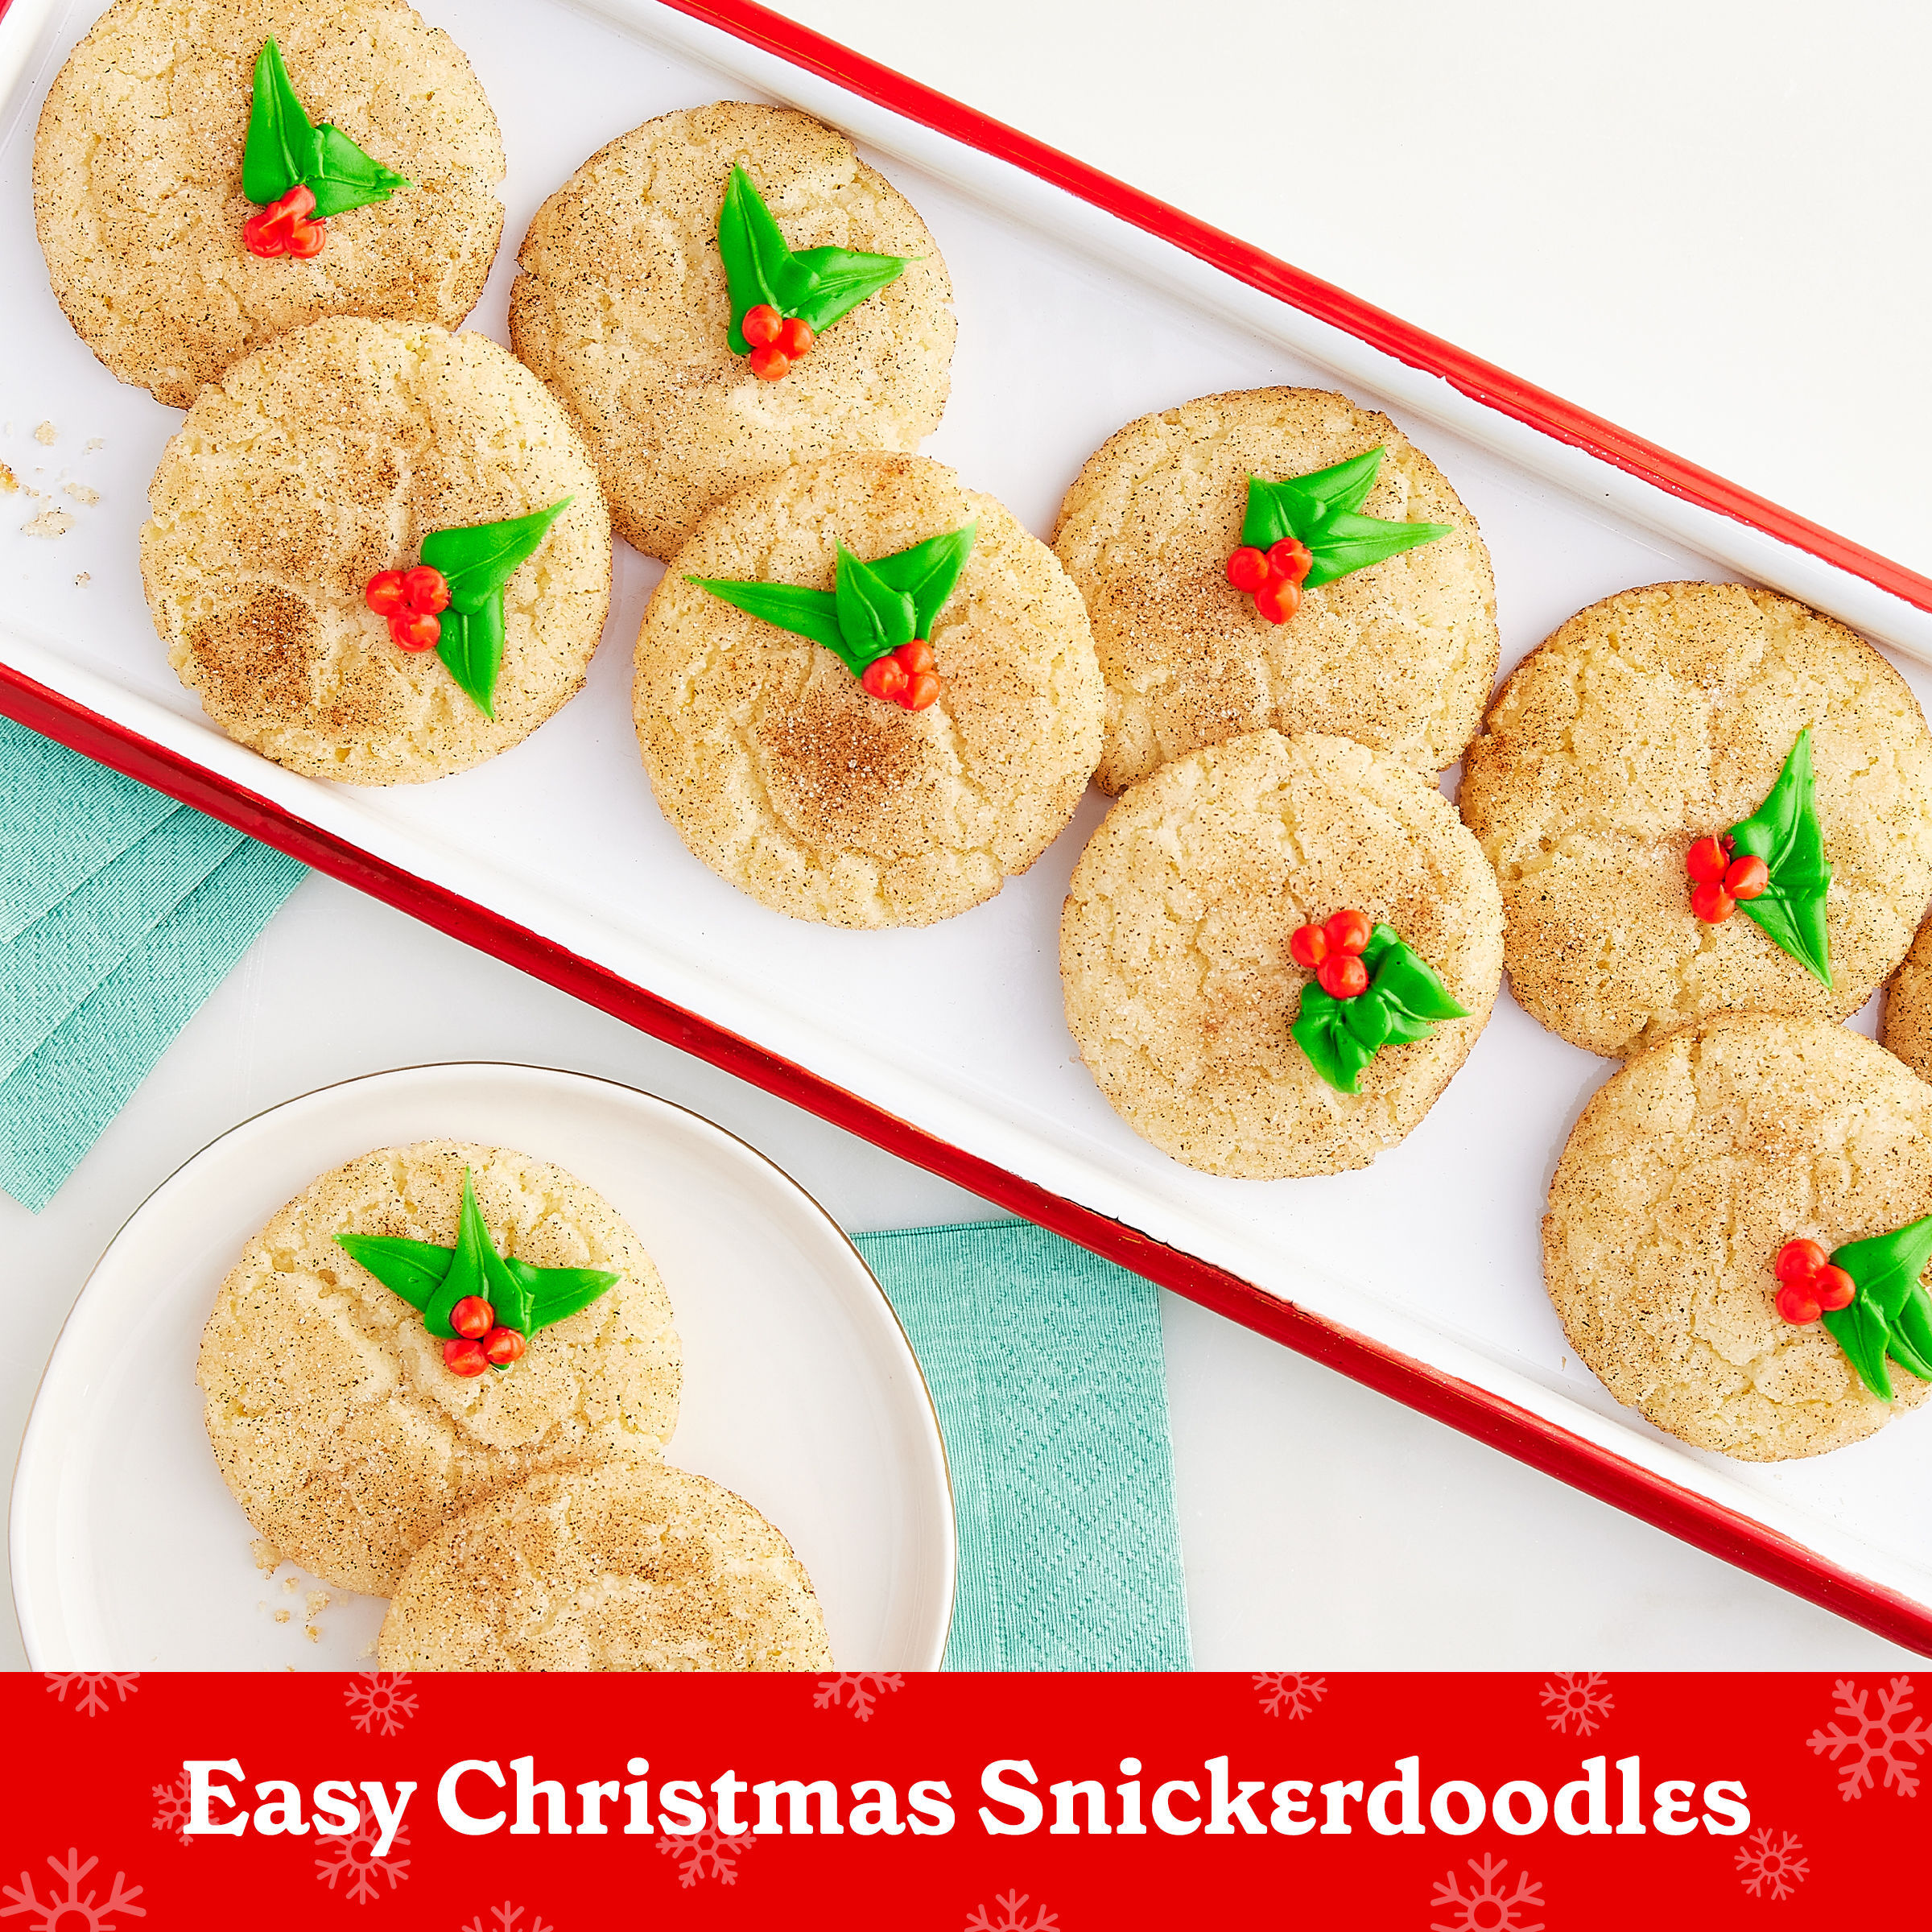 Betty Crocker Sugar Cookies, Cookie Baking Mix, 17.5 oz - image 7 of 10